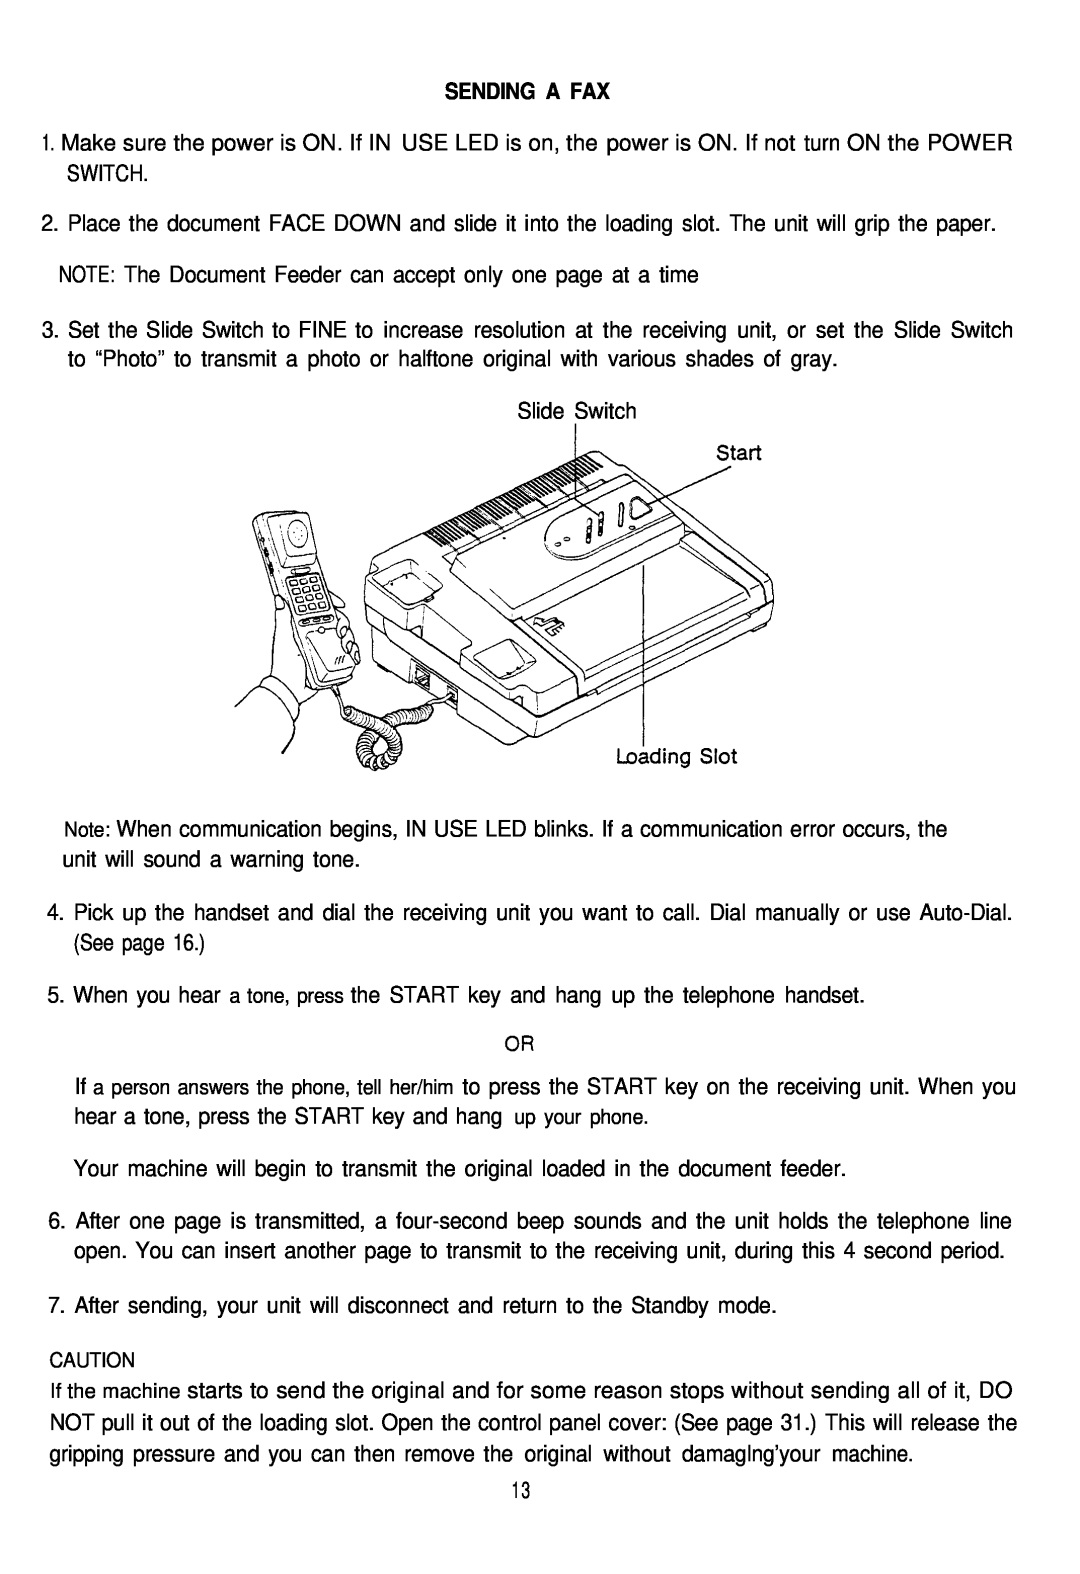 Audiovox AFX-1000 operation manual Sending A Fax 